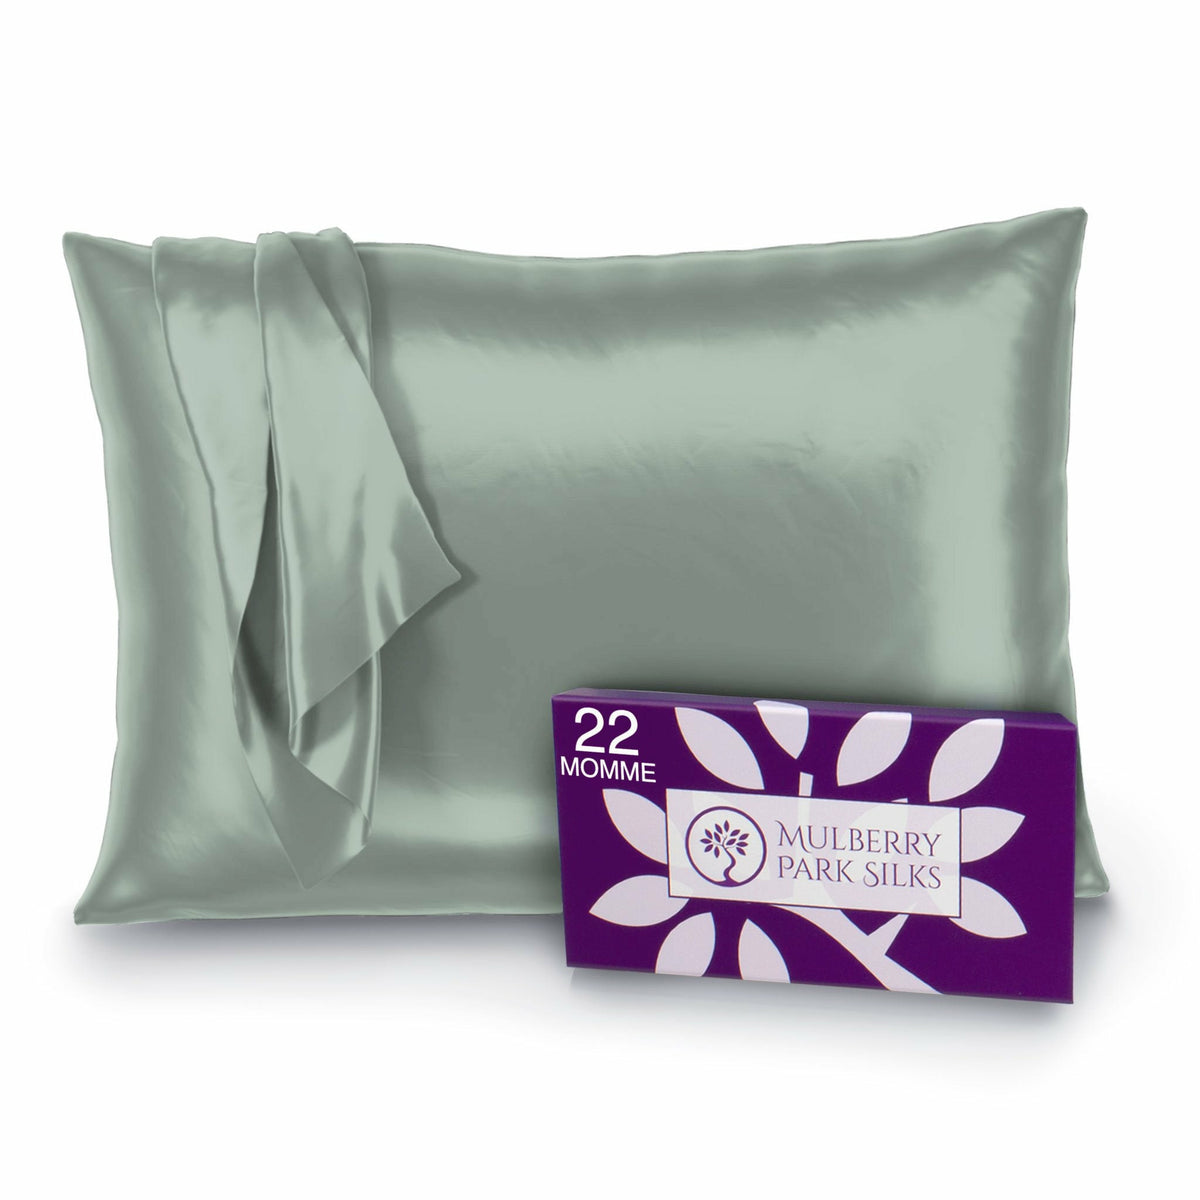 Mulberry Park Silks Deluxe 22 Momme Pure Silk Pillowcase Main Sage Fine Linens